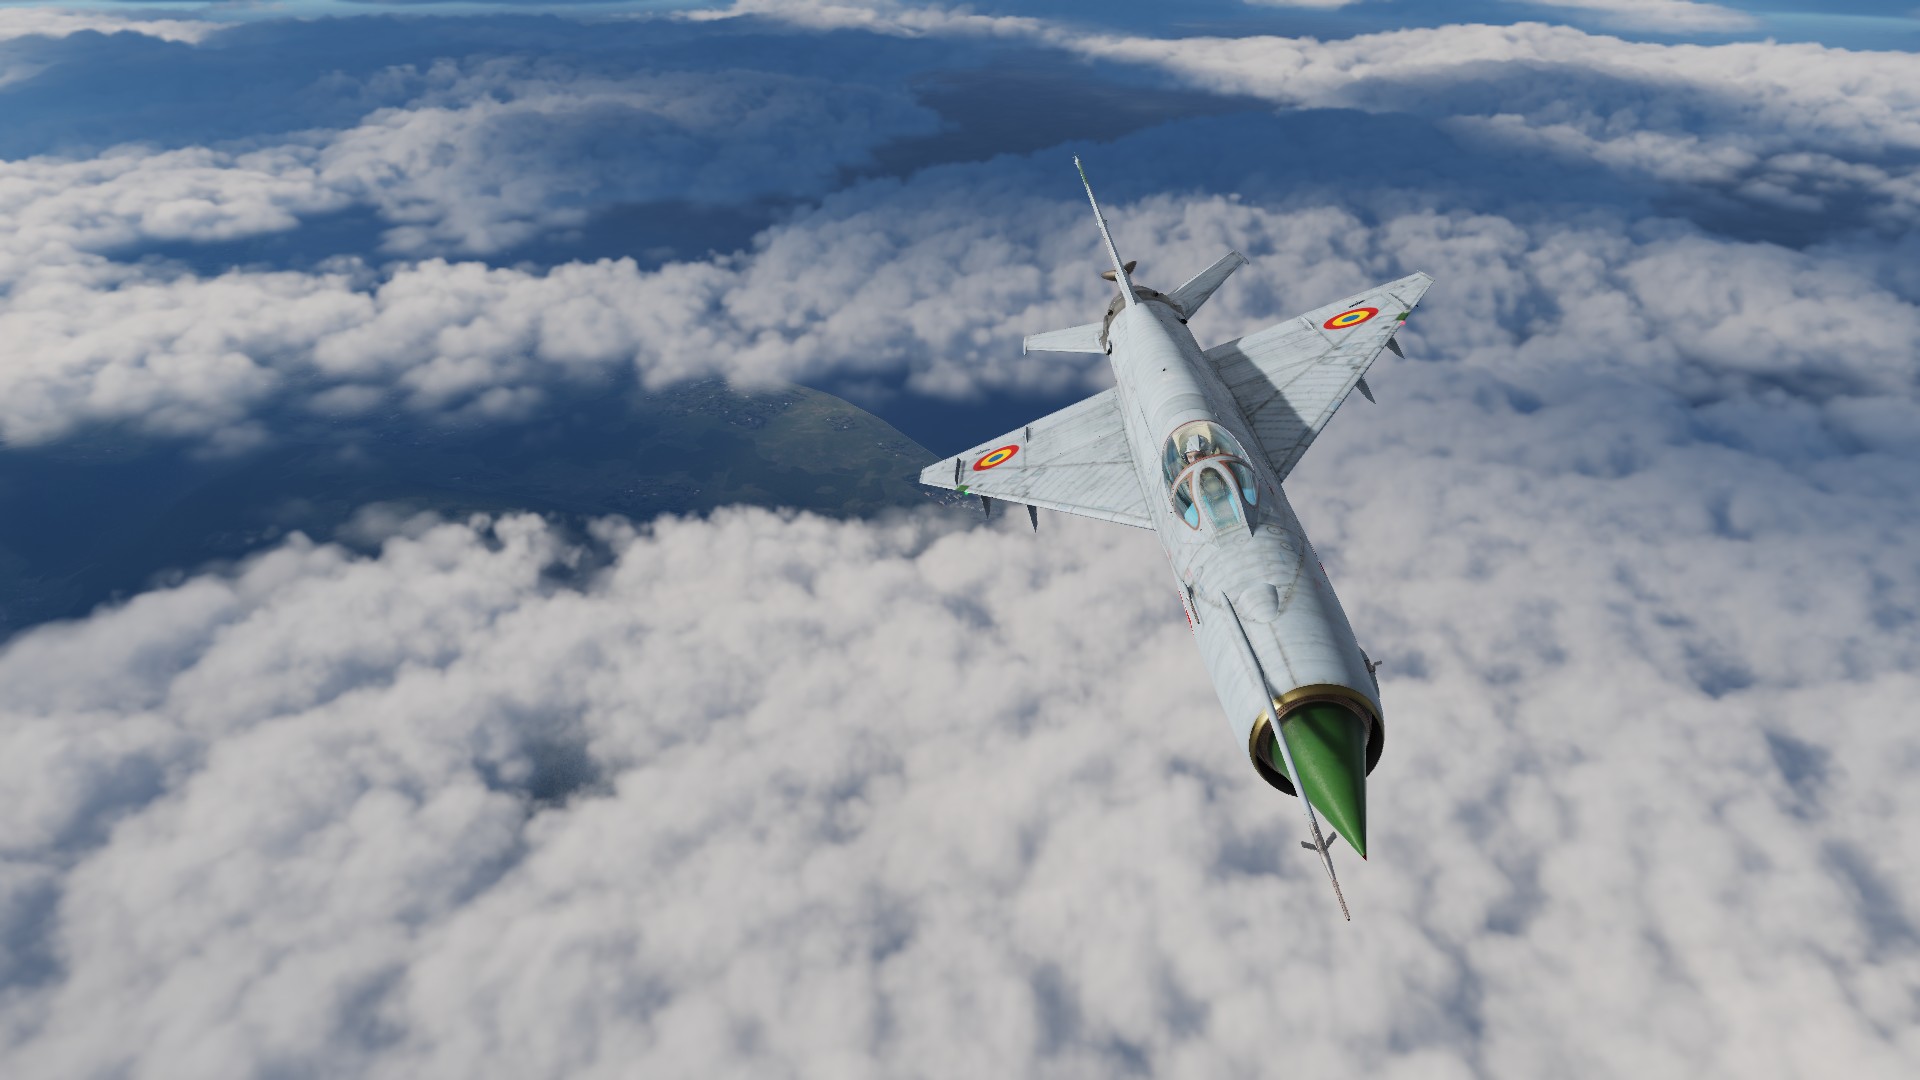 Top 5 Flight Simulator Games for PC